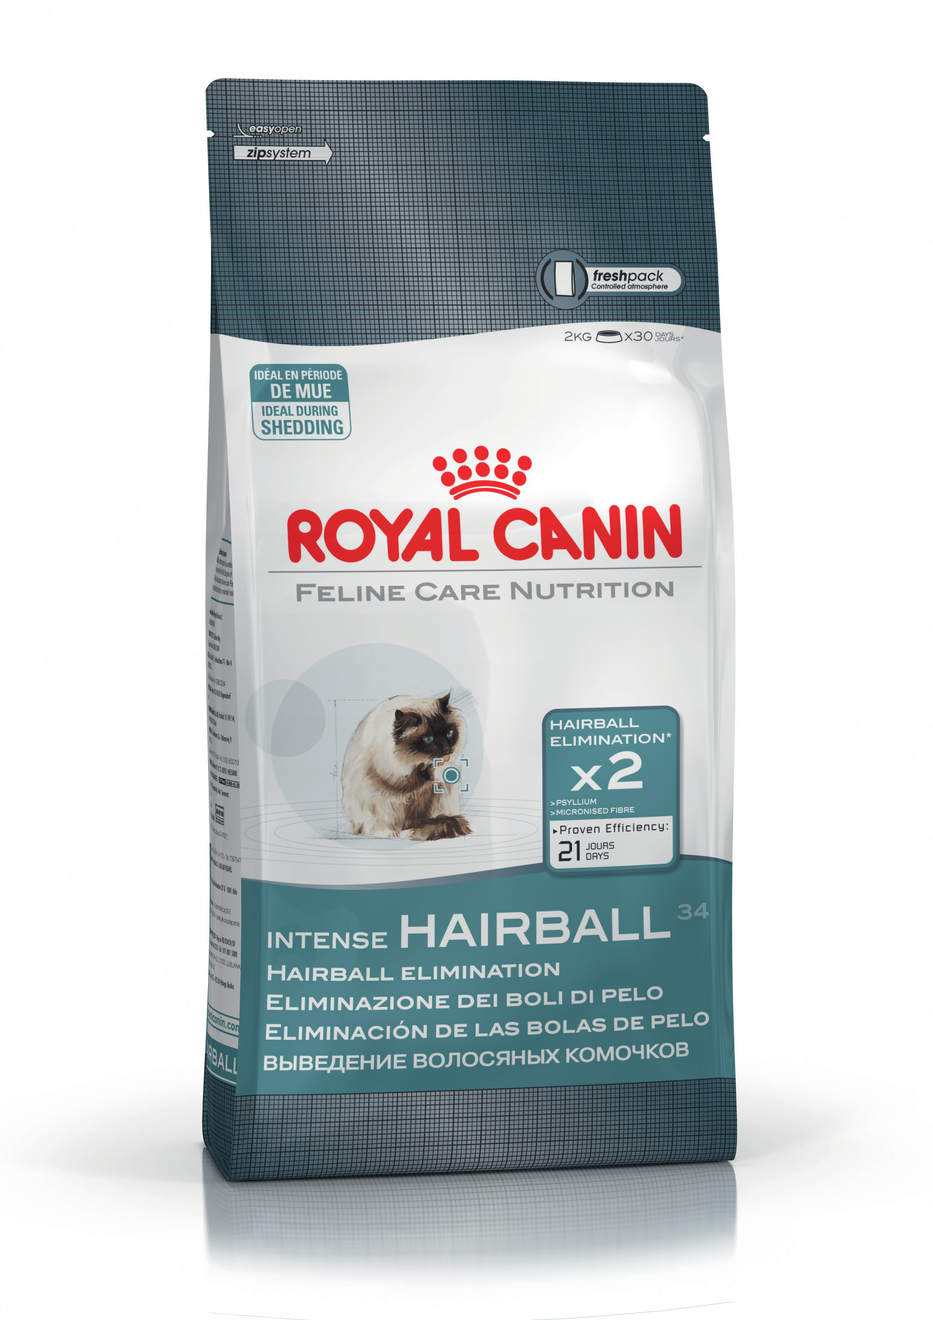 intense hairball 34 royal canin